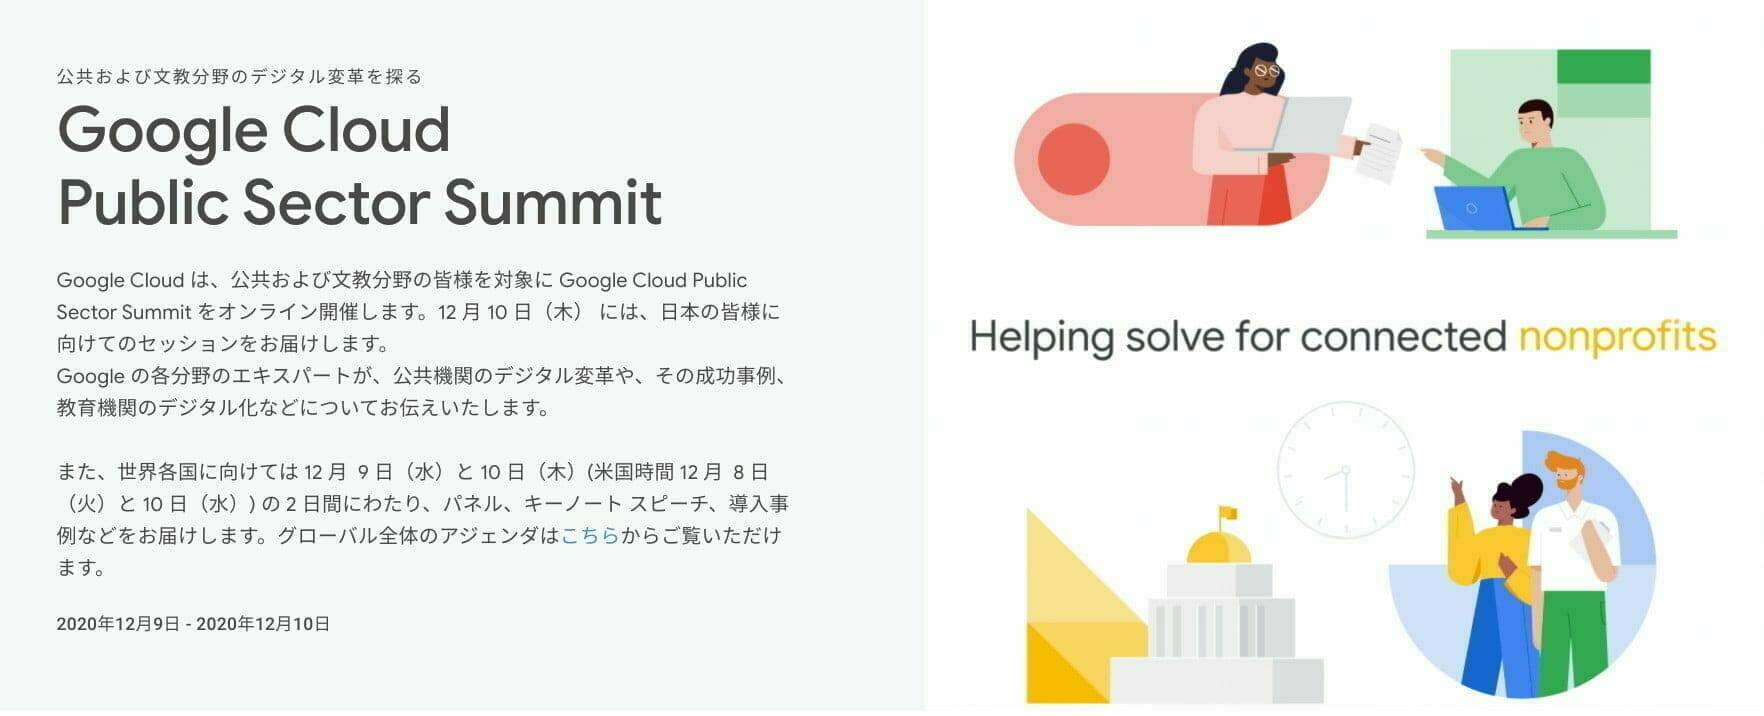 Google Cloud Public Sector Summit